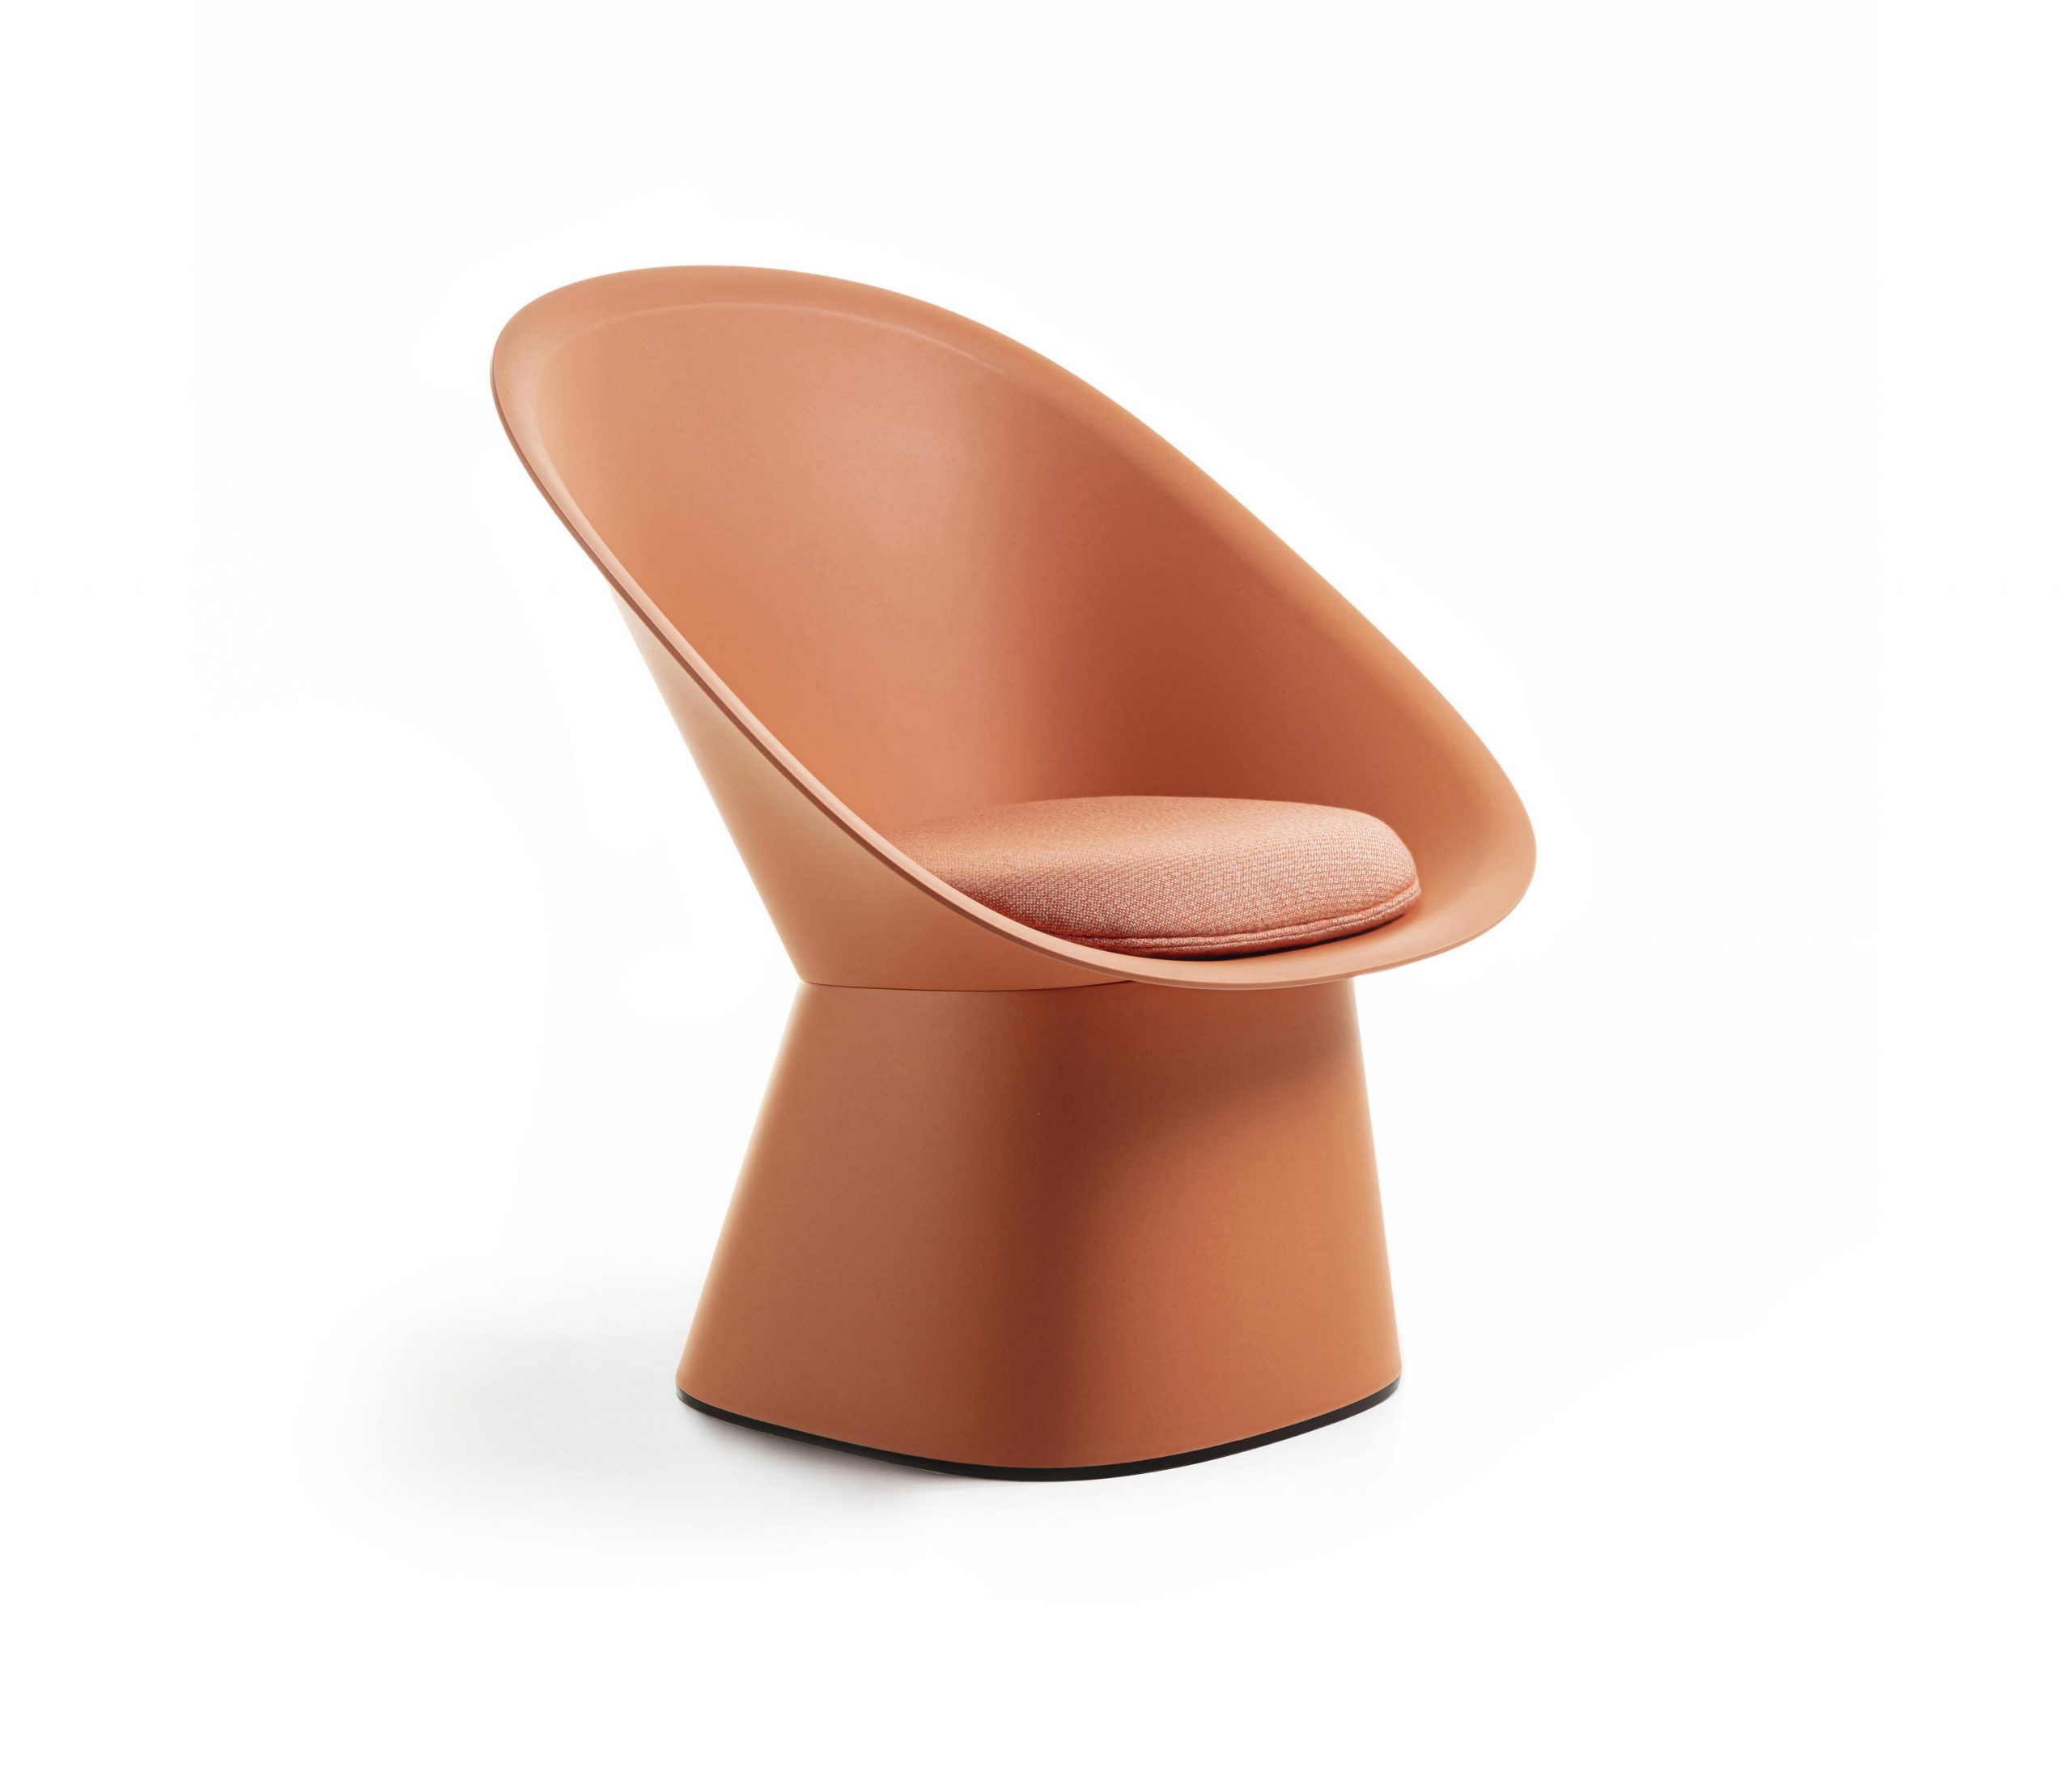 Sensu Lounge Chair by Simone Viola for TOOU